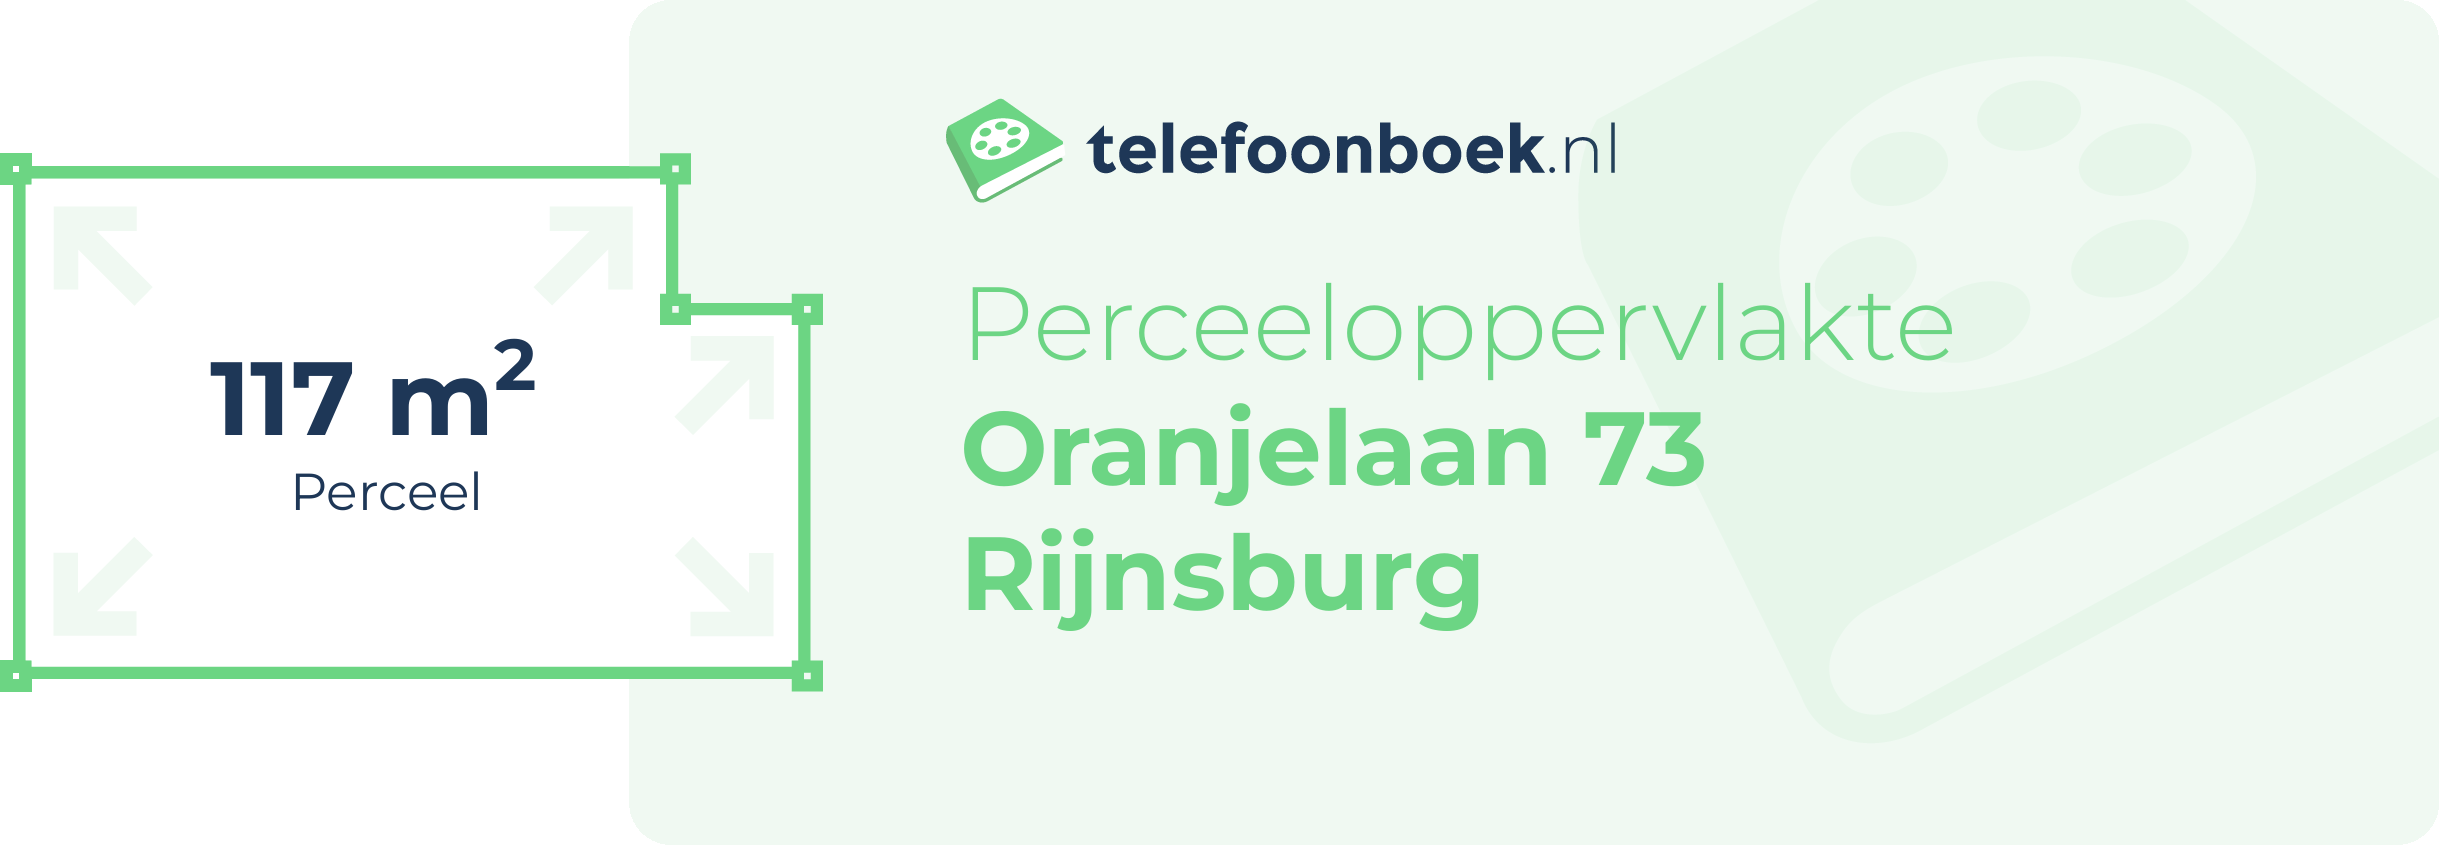 Perceeloppervlakte Oranjelaan 73 Rijnsburg